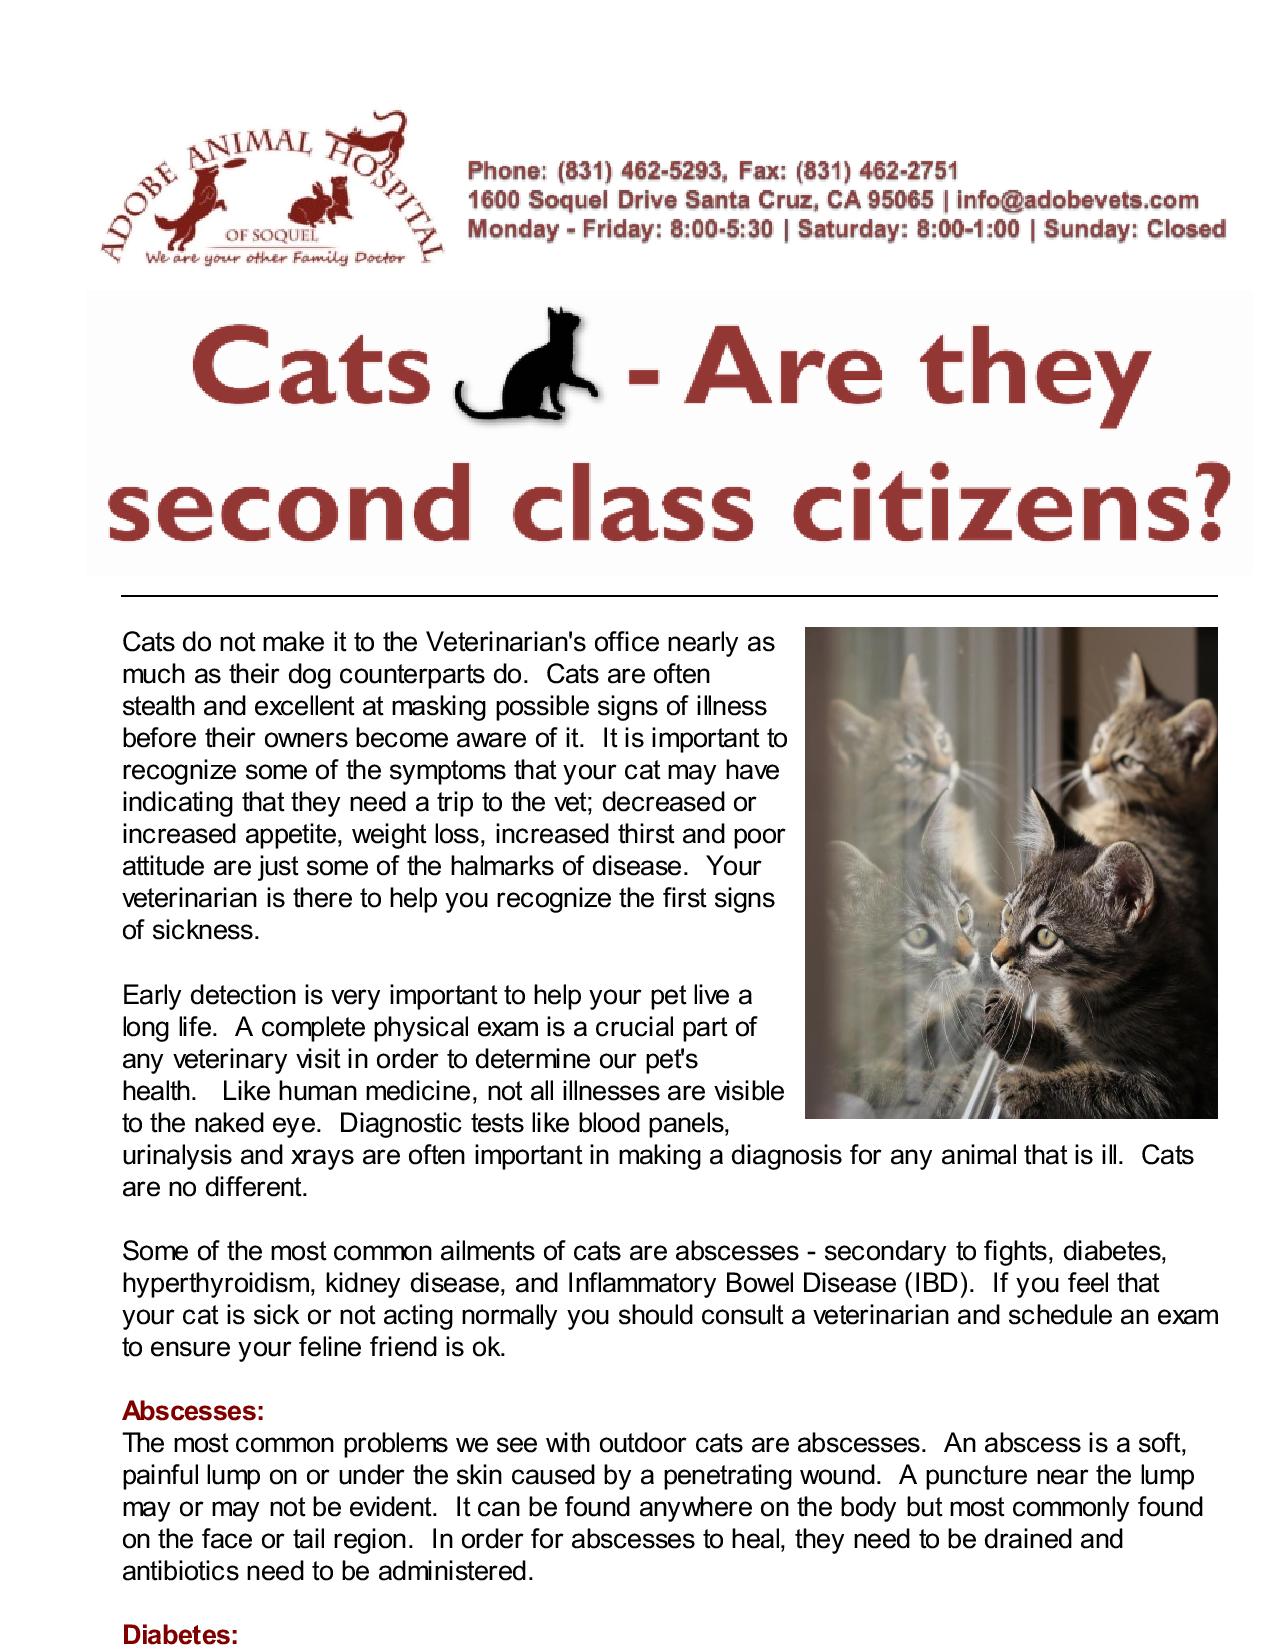 Cats - Second Class Citizens